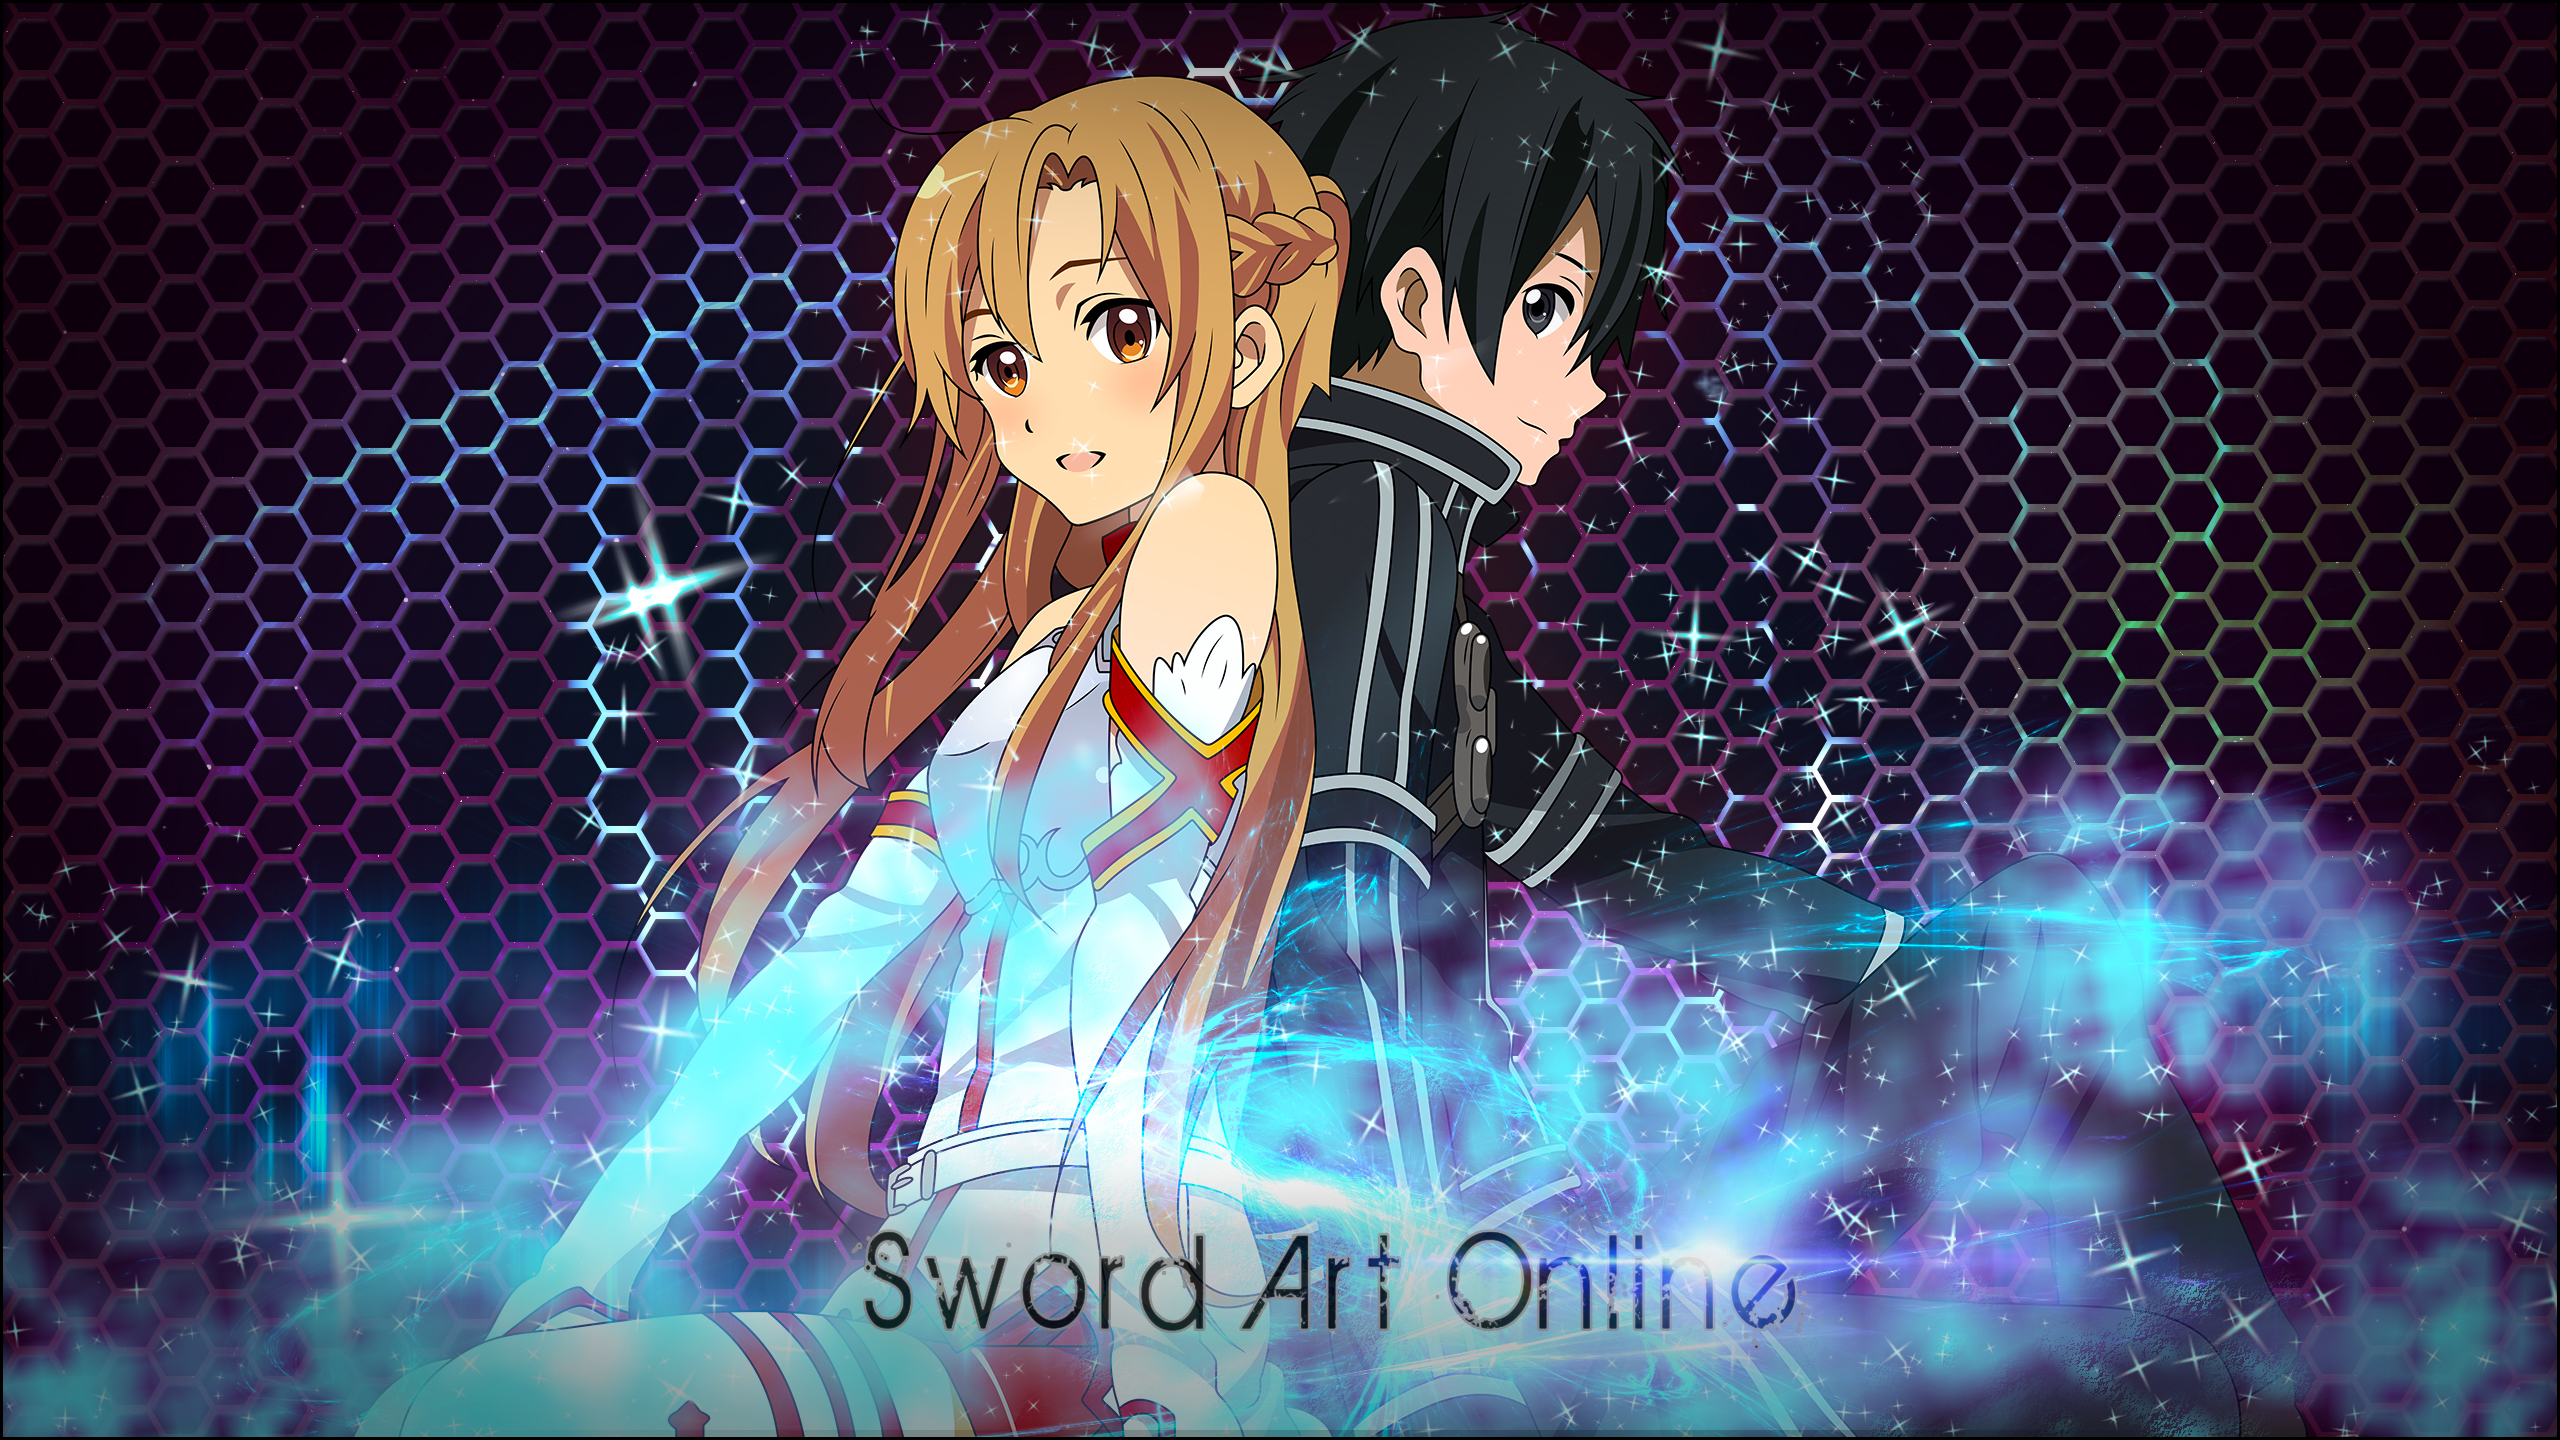 Lexica  A fantasy warrior is brandishing black sword in a mystical  forest Anime Sword Art Online Reki Kawahara Abec style  illustration you